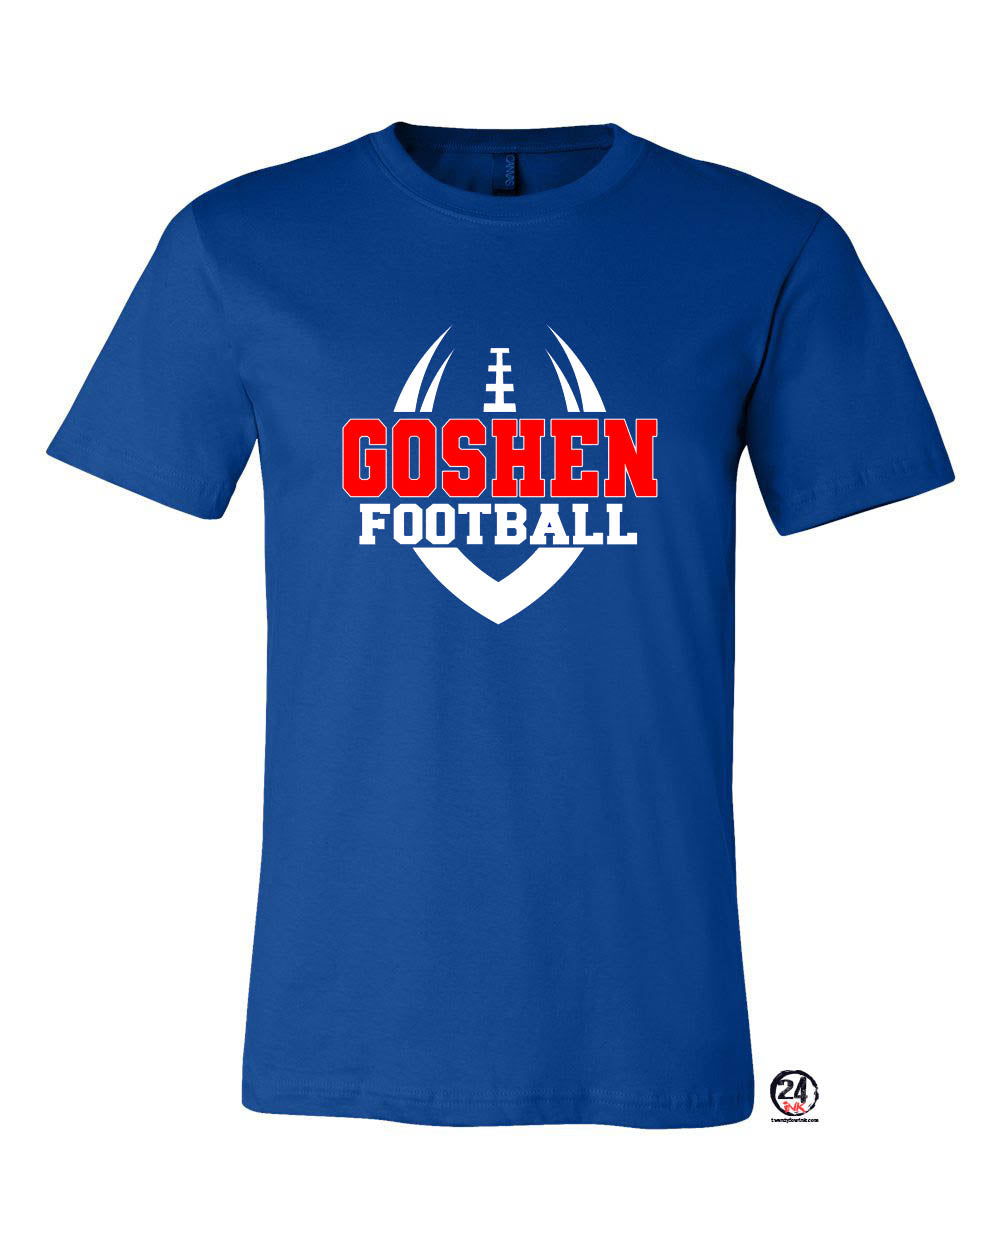 Goshen Football Design 1 t-Shirt